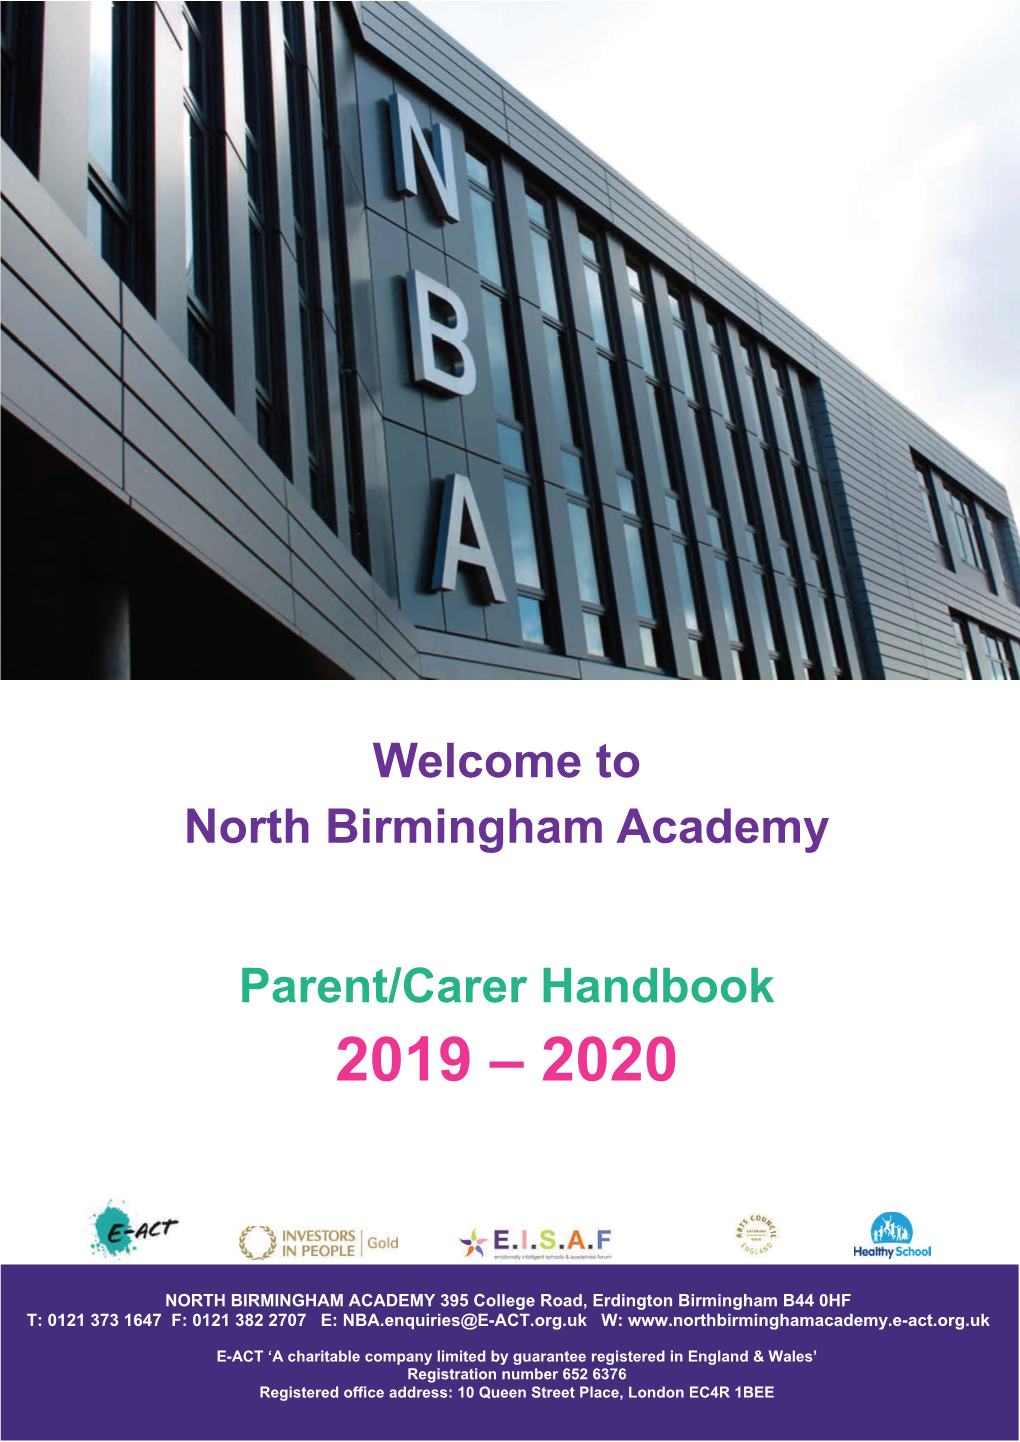 Welcome to North Birmingham Academy Parent/Carer Handbook